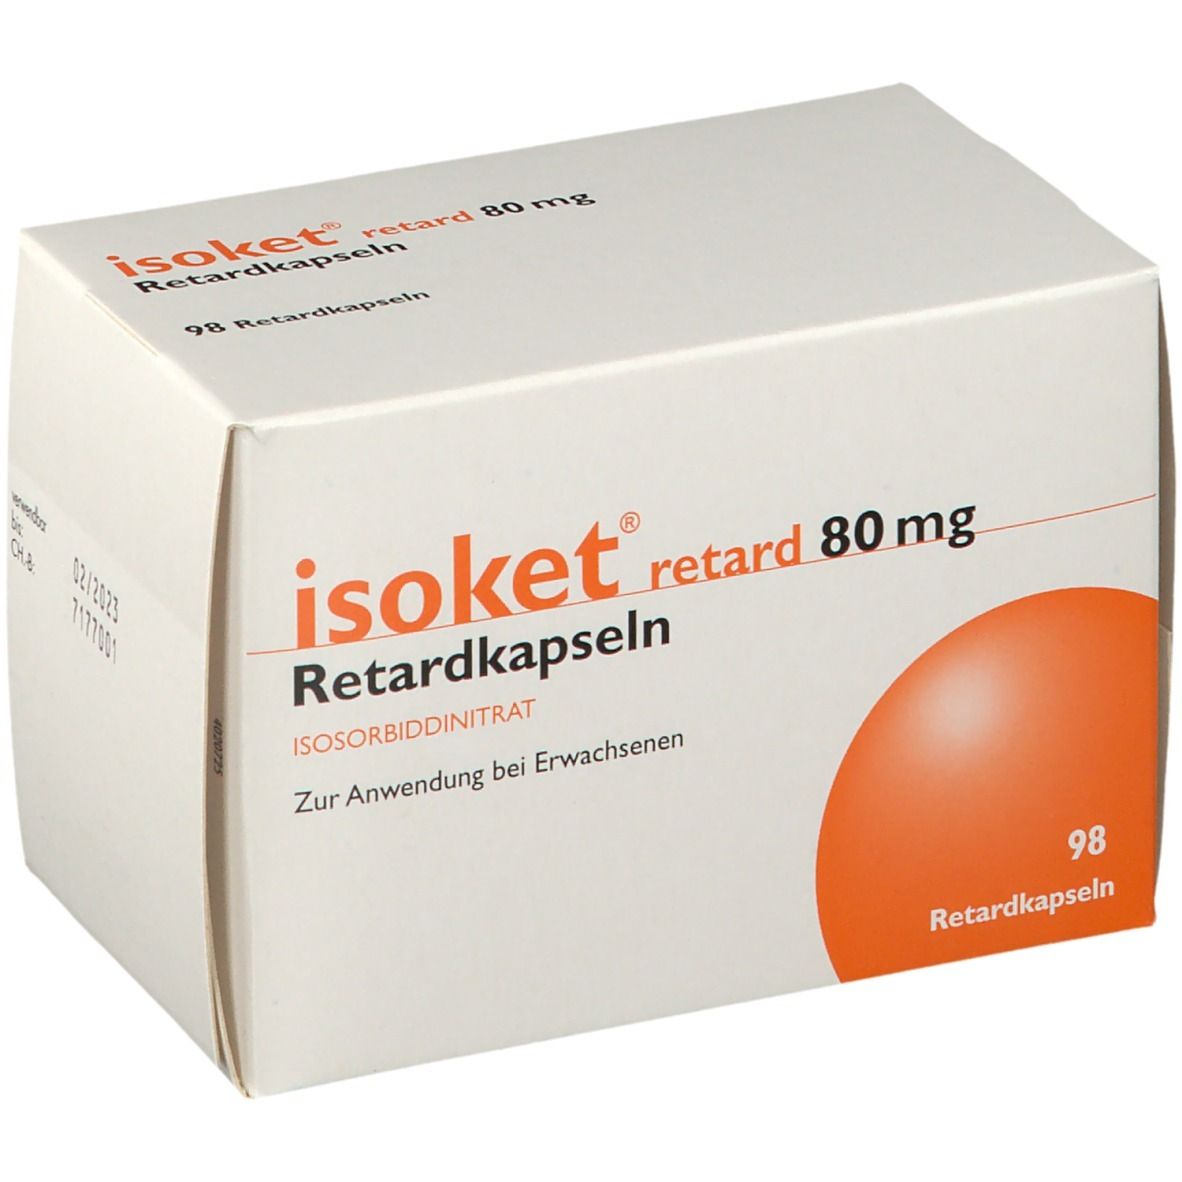 isoket® retard 80 mg